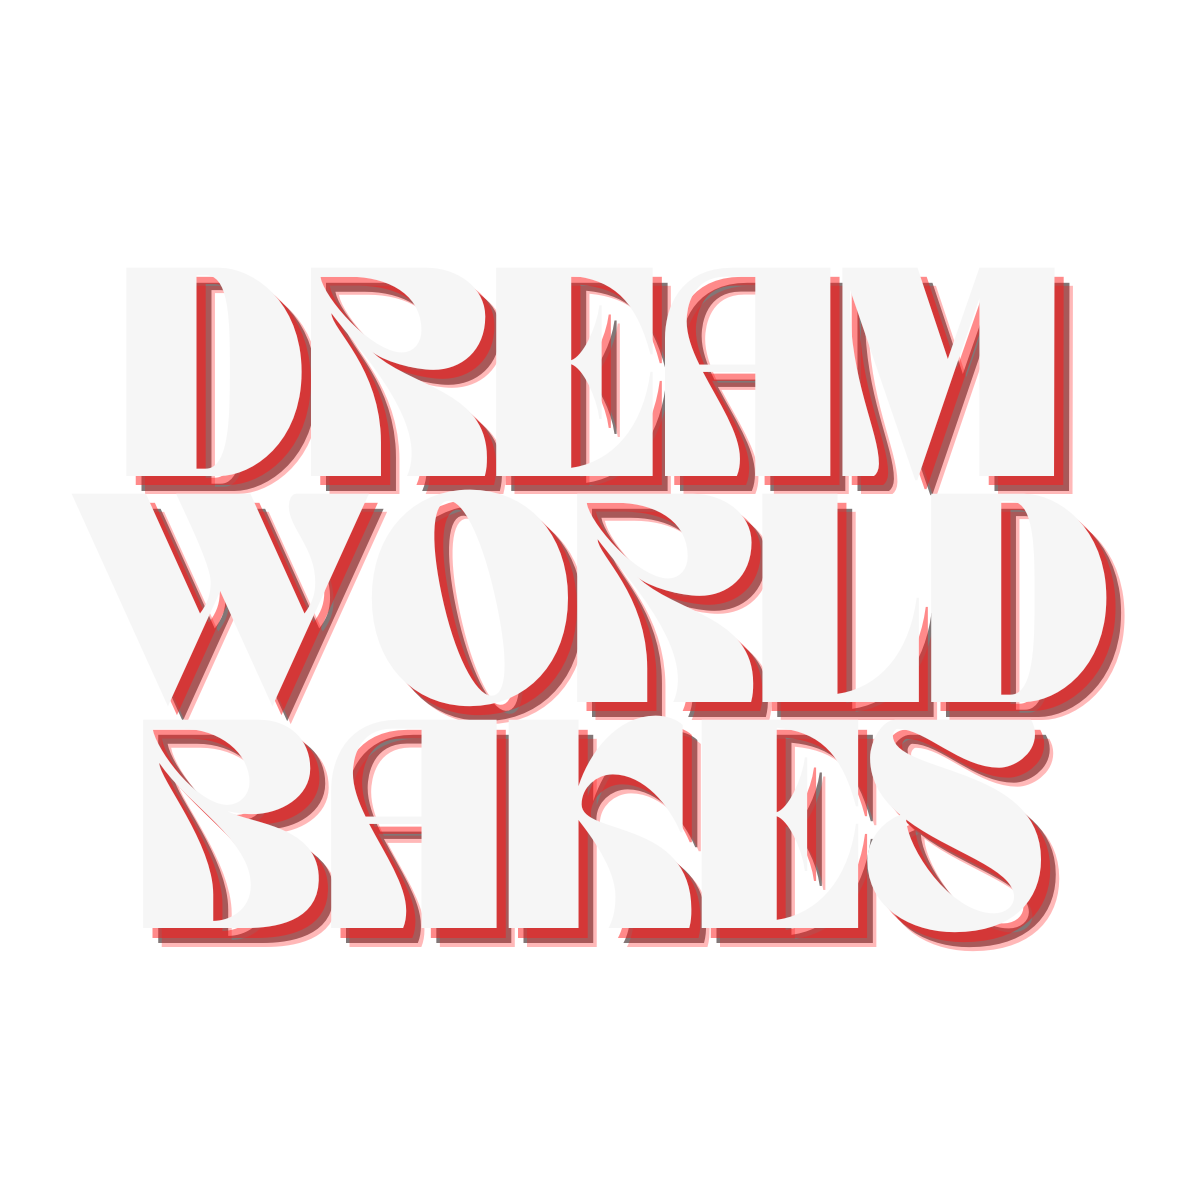 DreamWorld Bakes